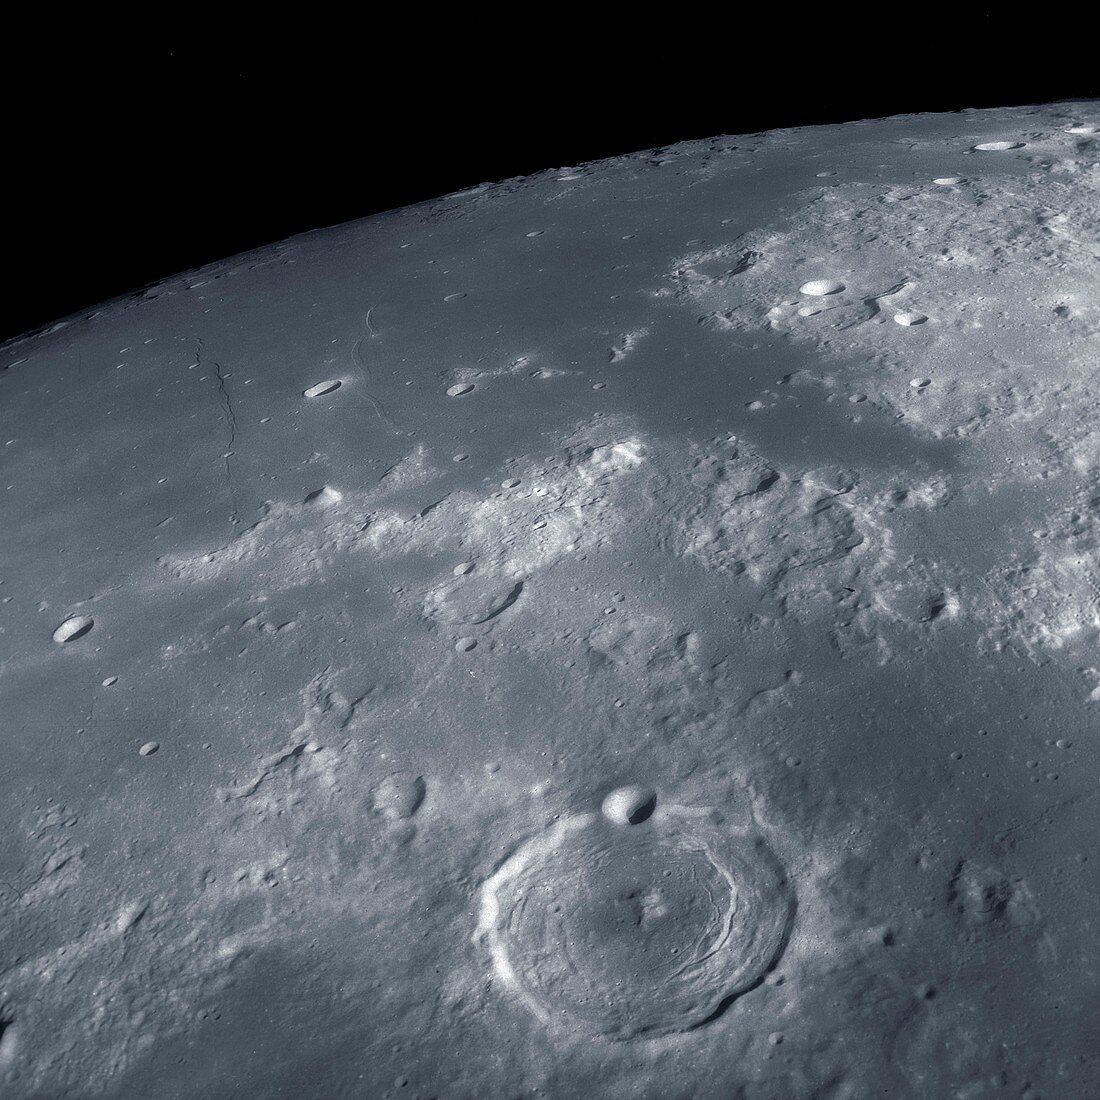 Lunar landscape, Apollo 11 photograph